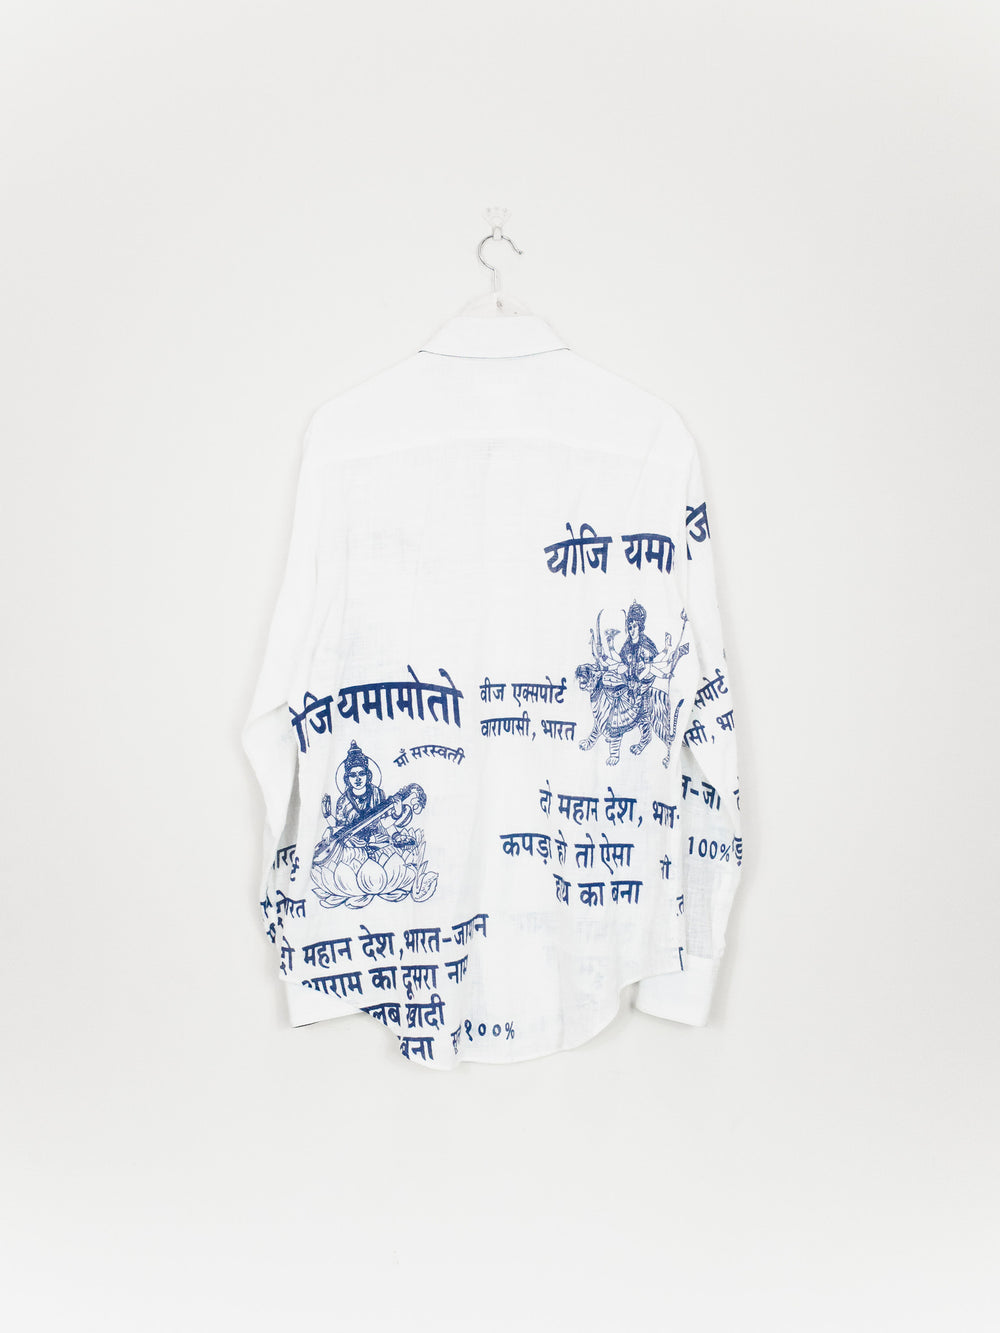 Yohji Yamamoto Pour Homme AW04 Hindi Print Shirt